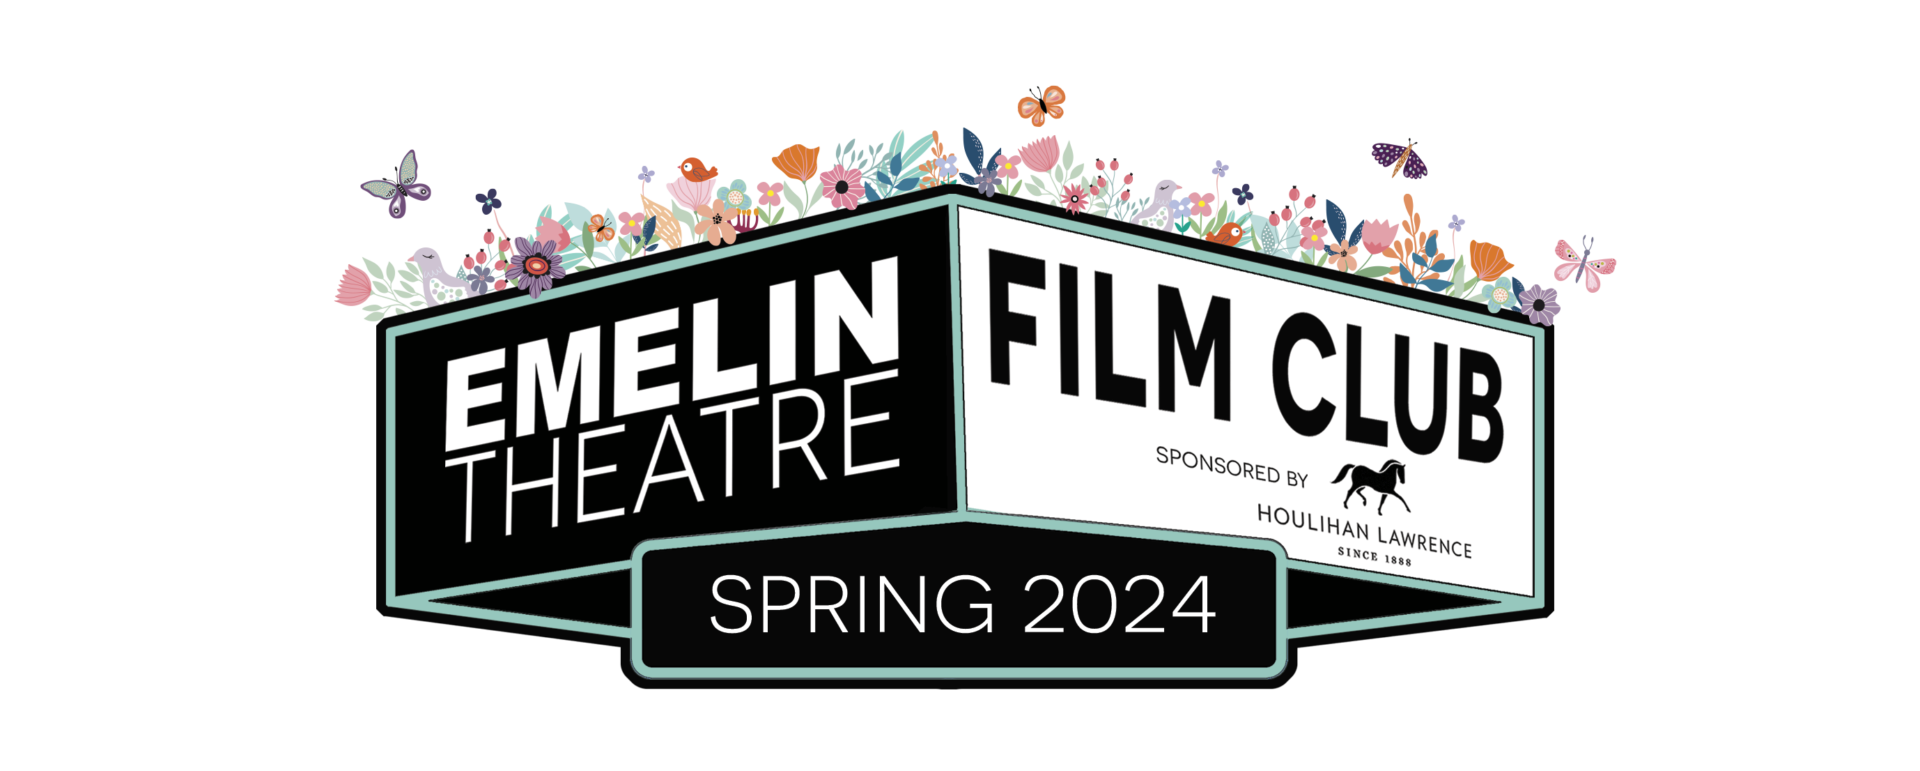 Spring Film Club 2024